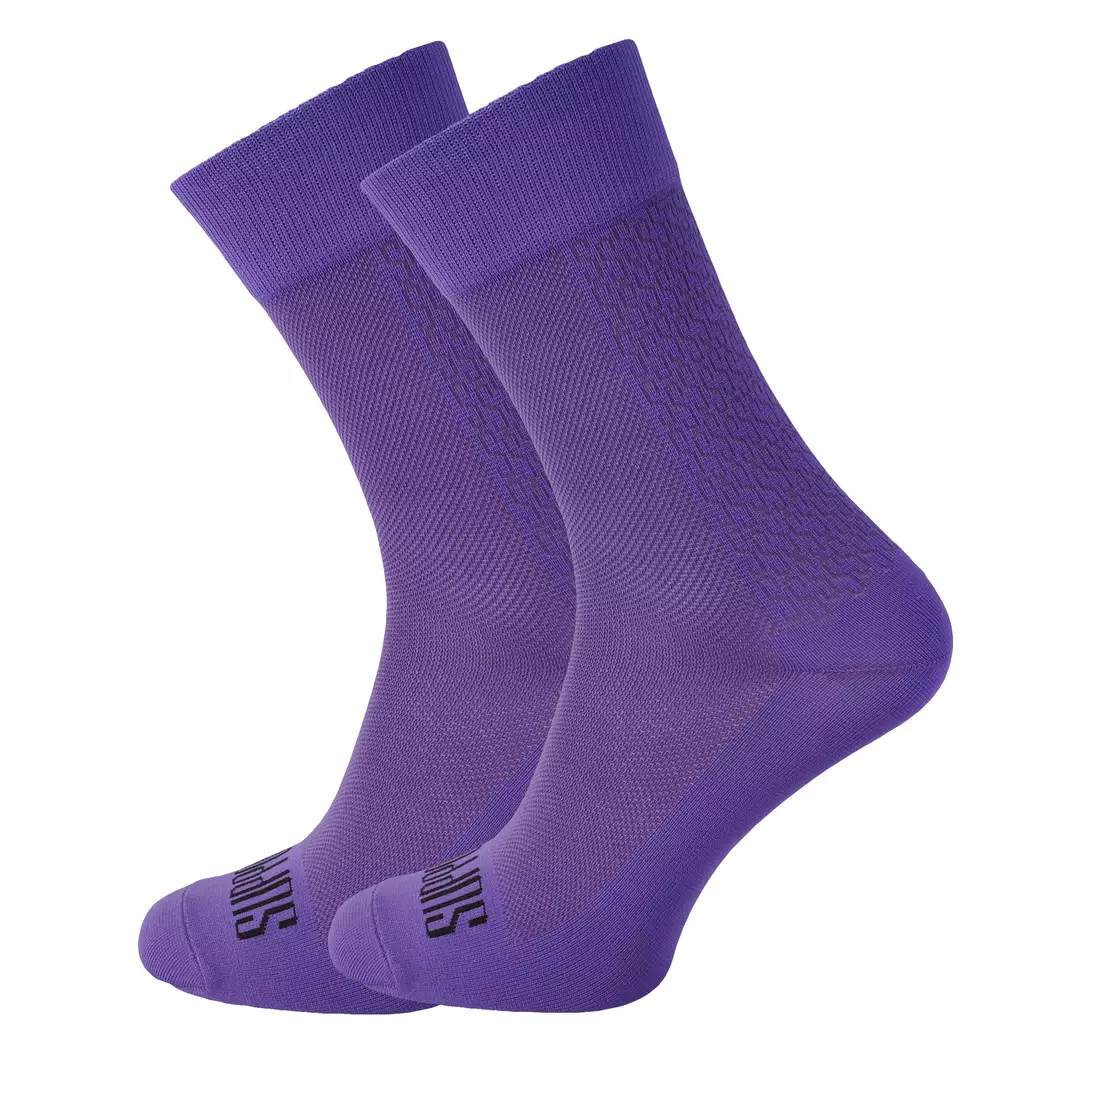 SUPPORTSPORT cycling socks S-LIGHT purple